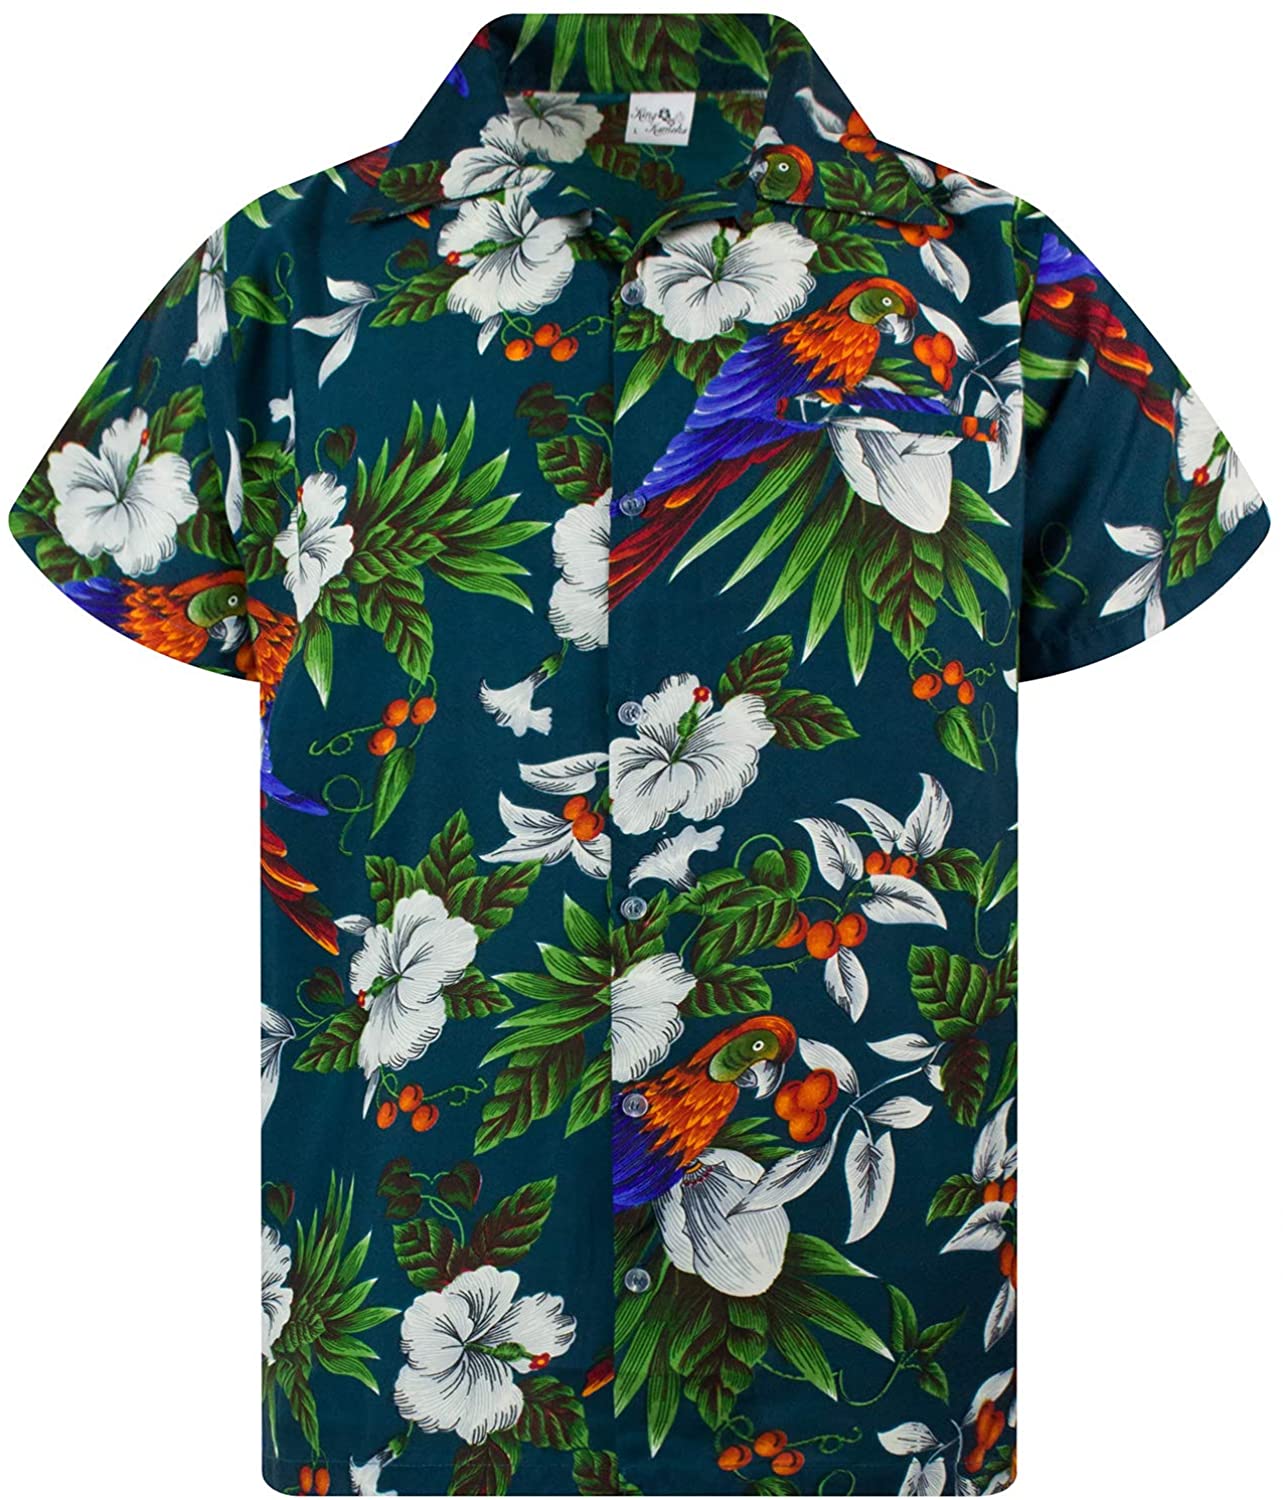 King Kameha Hawaiian Shirt for Men Funky Casual Button Down Very Loud Shortsleeve Unisex Parrot Cockatoo 